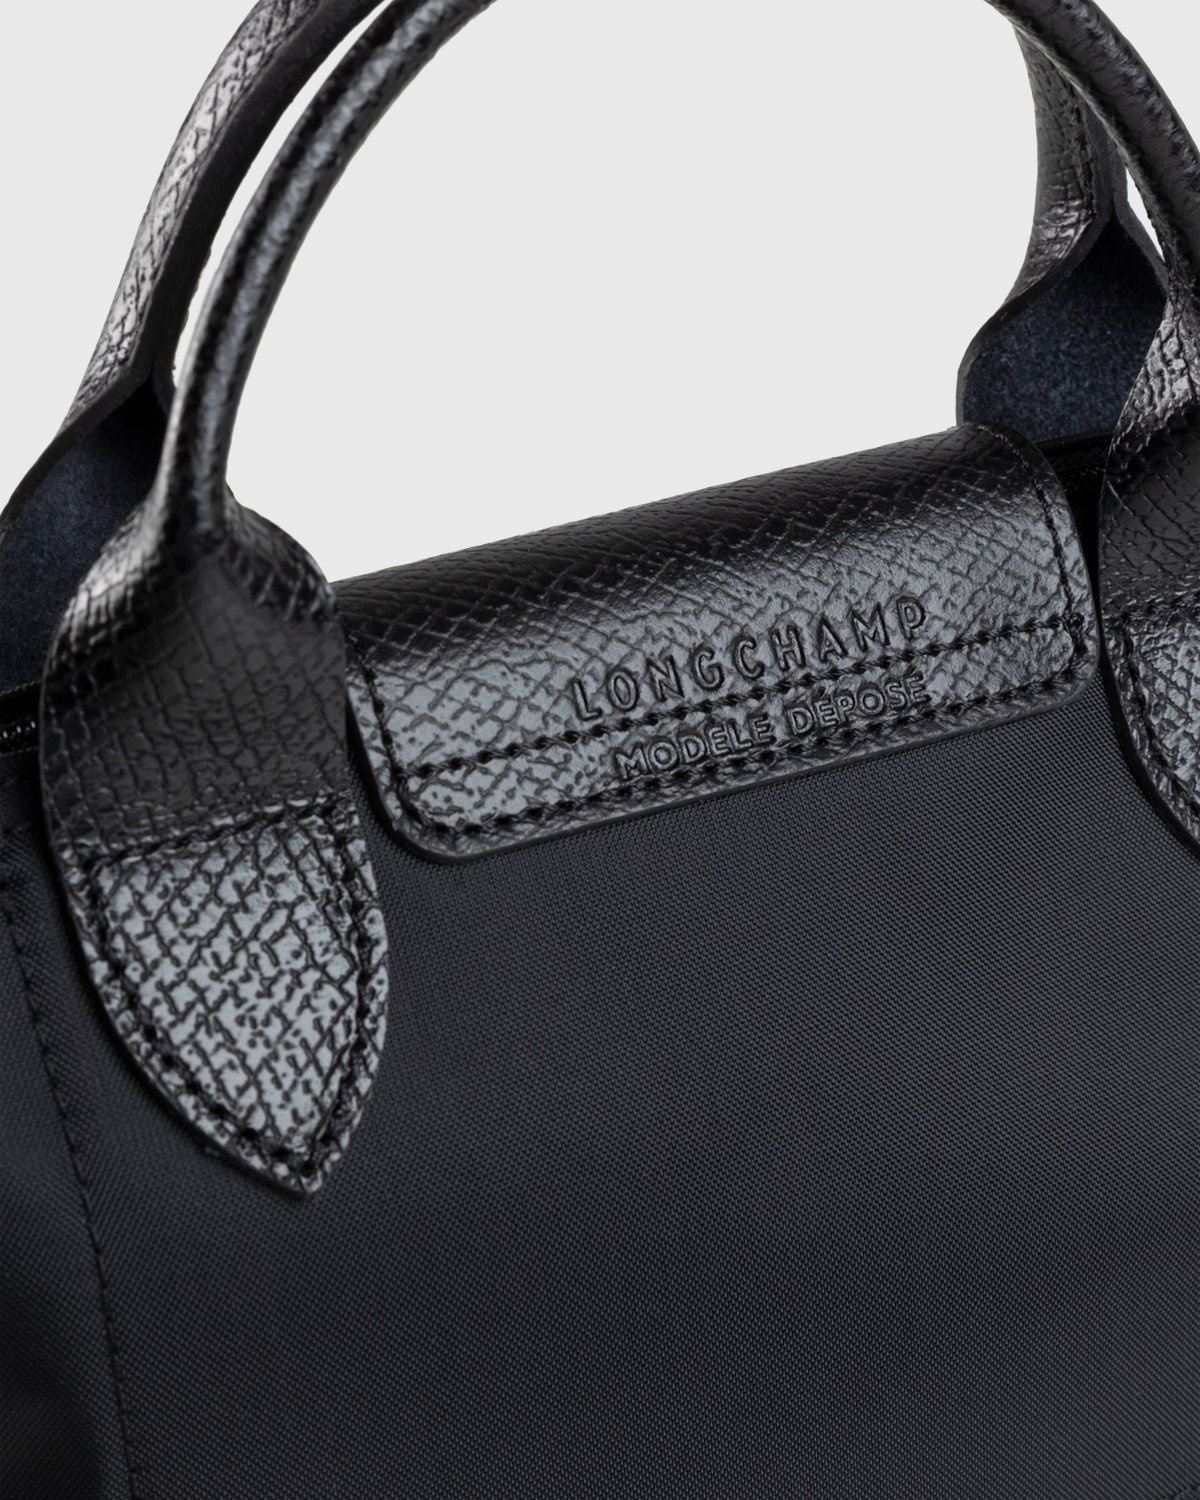 Buy Longchamp Le Pliage Cuir Top handle black leather. at